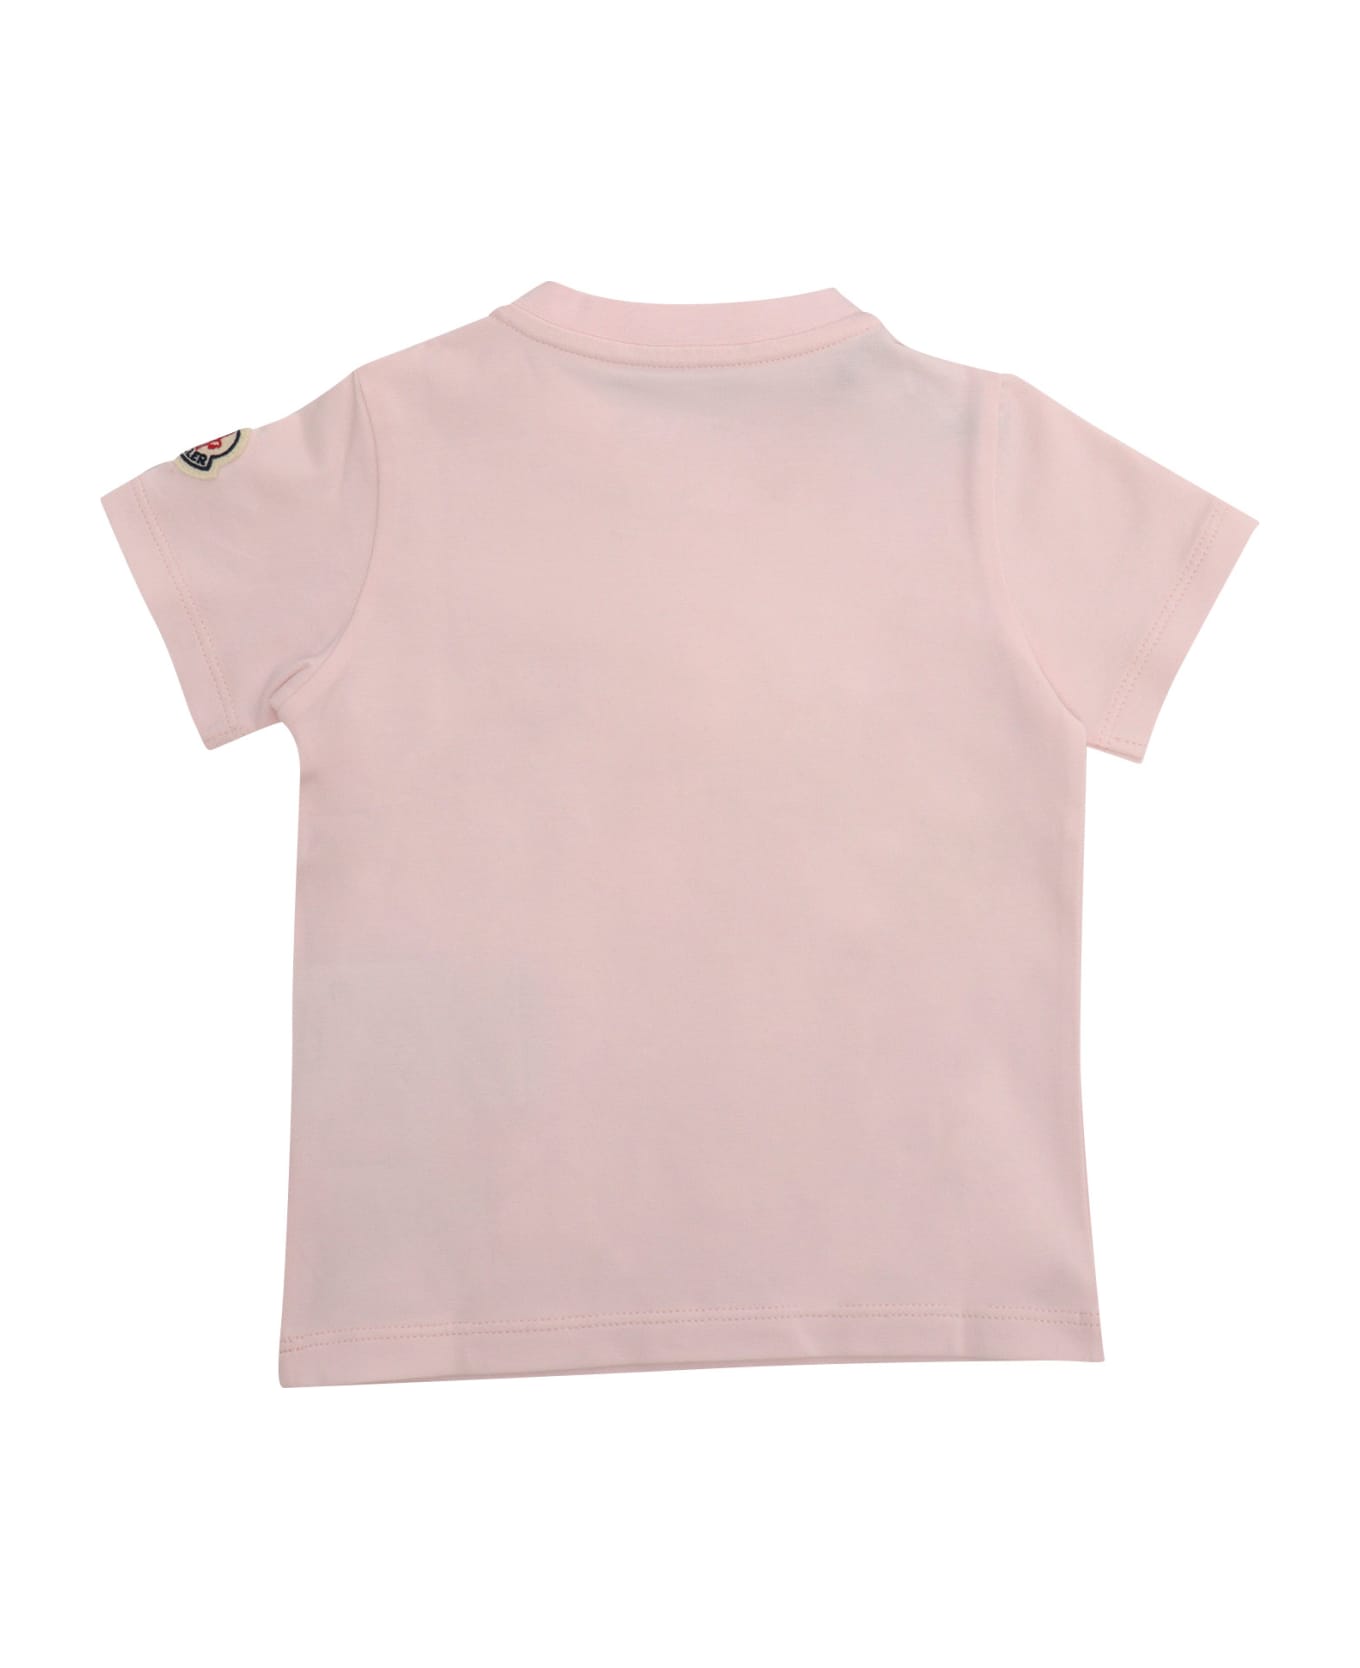 Moncler Pink T-shirt With Logo - PINK